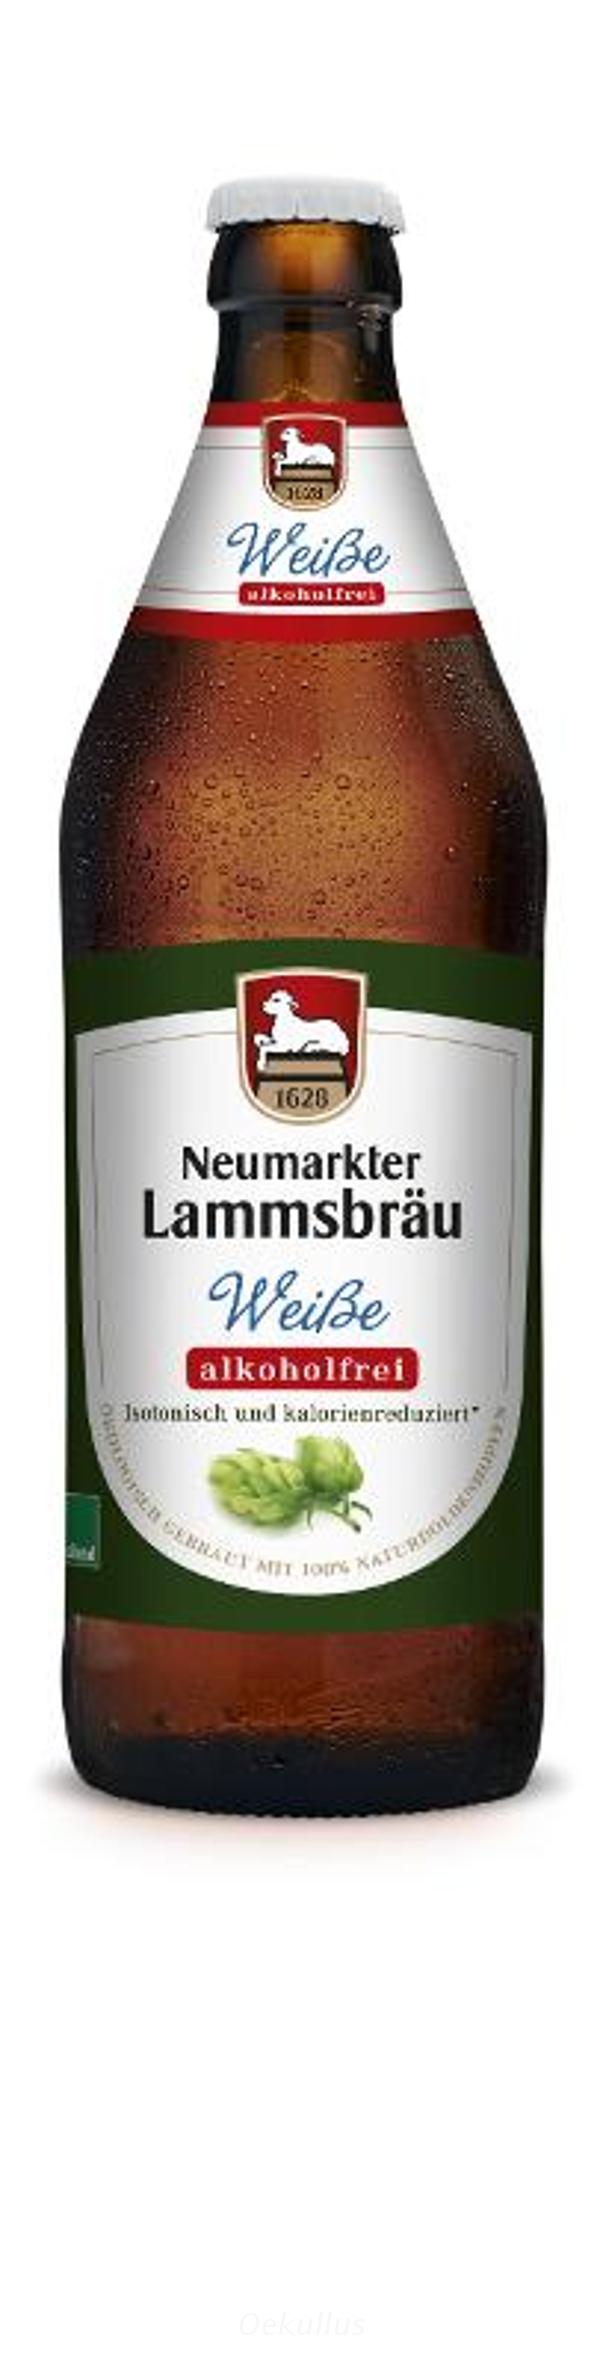 Produktfoto zu Weiße Lammsbräu alkoholfrei KISTE (10 x 0,5l)